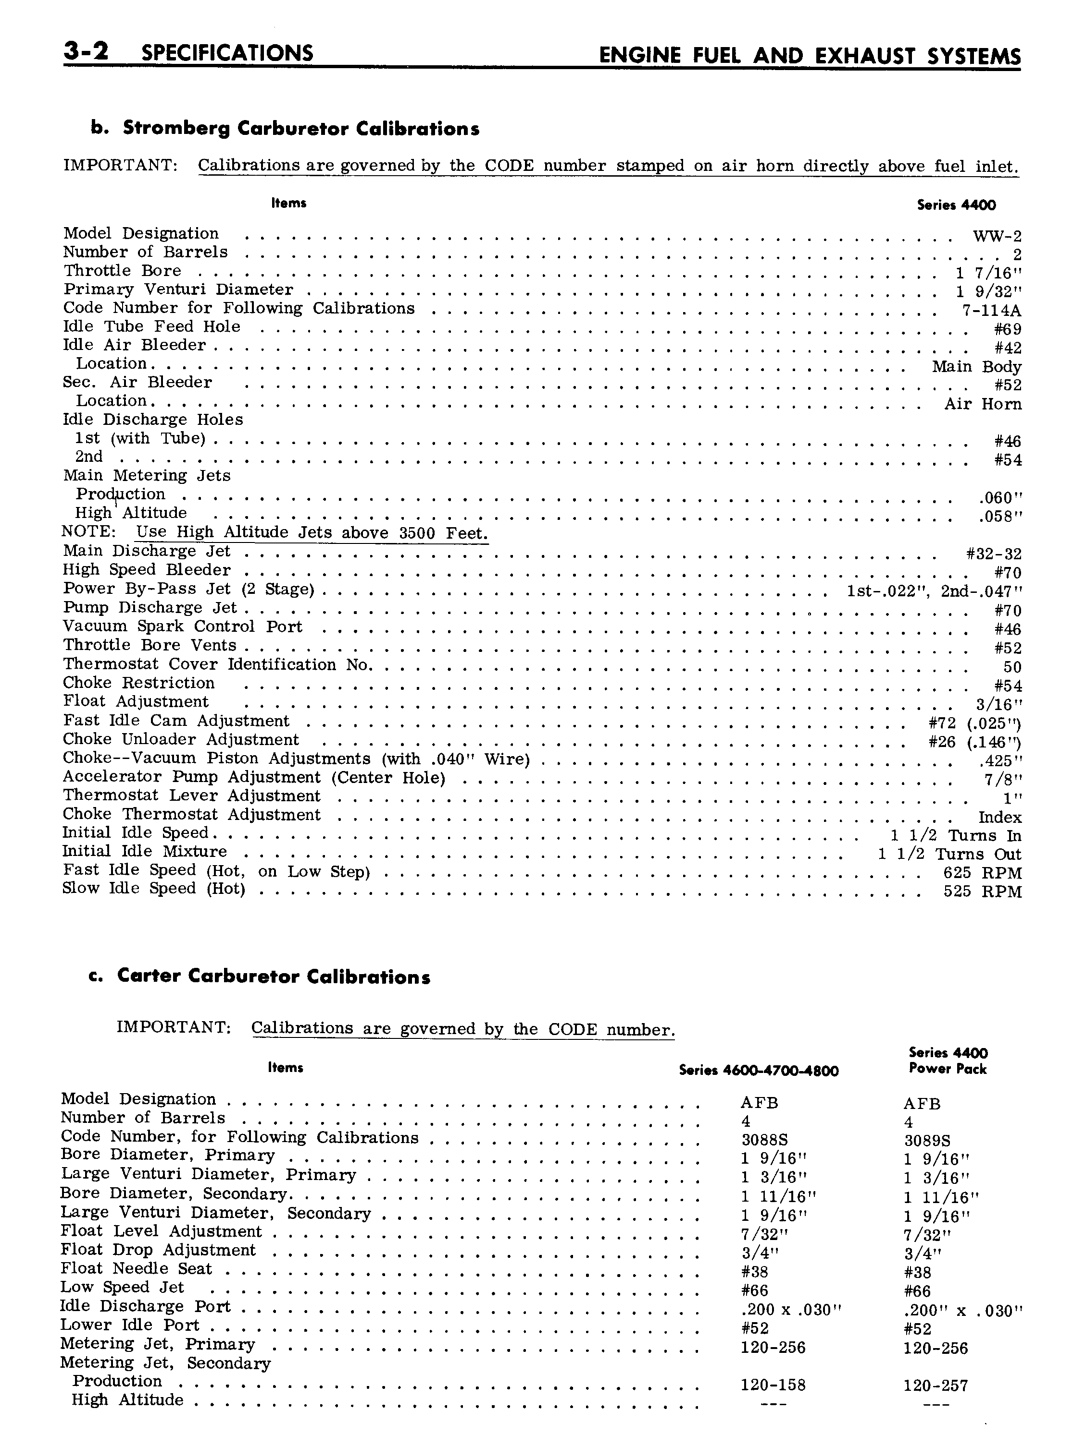 n_04 1961 Buick Shop Manual - Engine Fuel & Exhaust-002-002.jpg